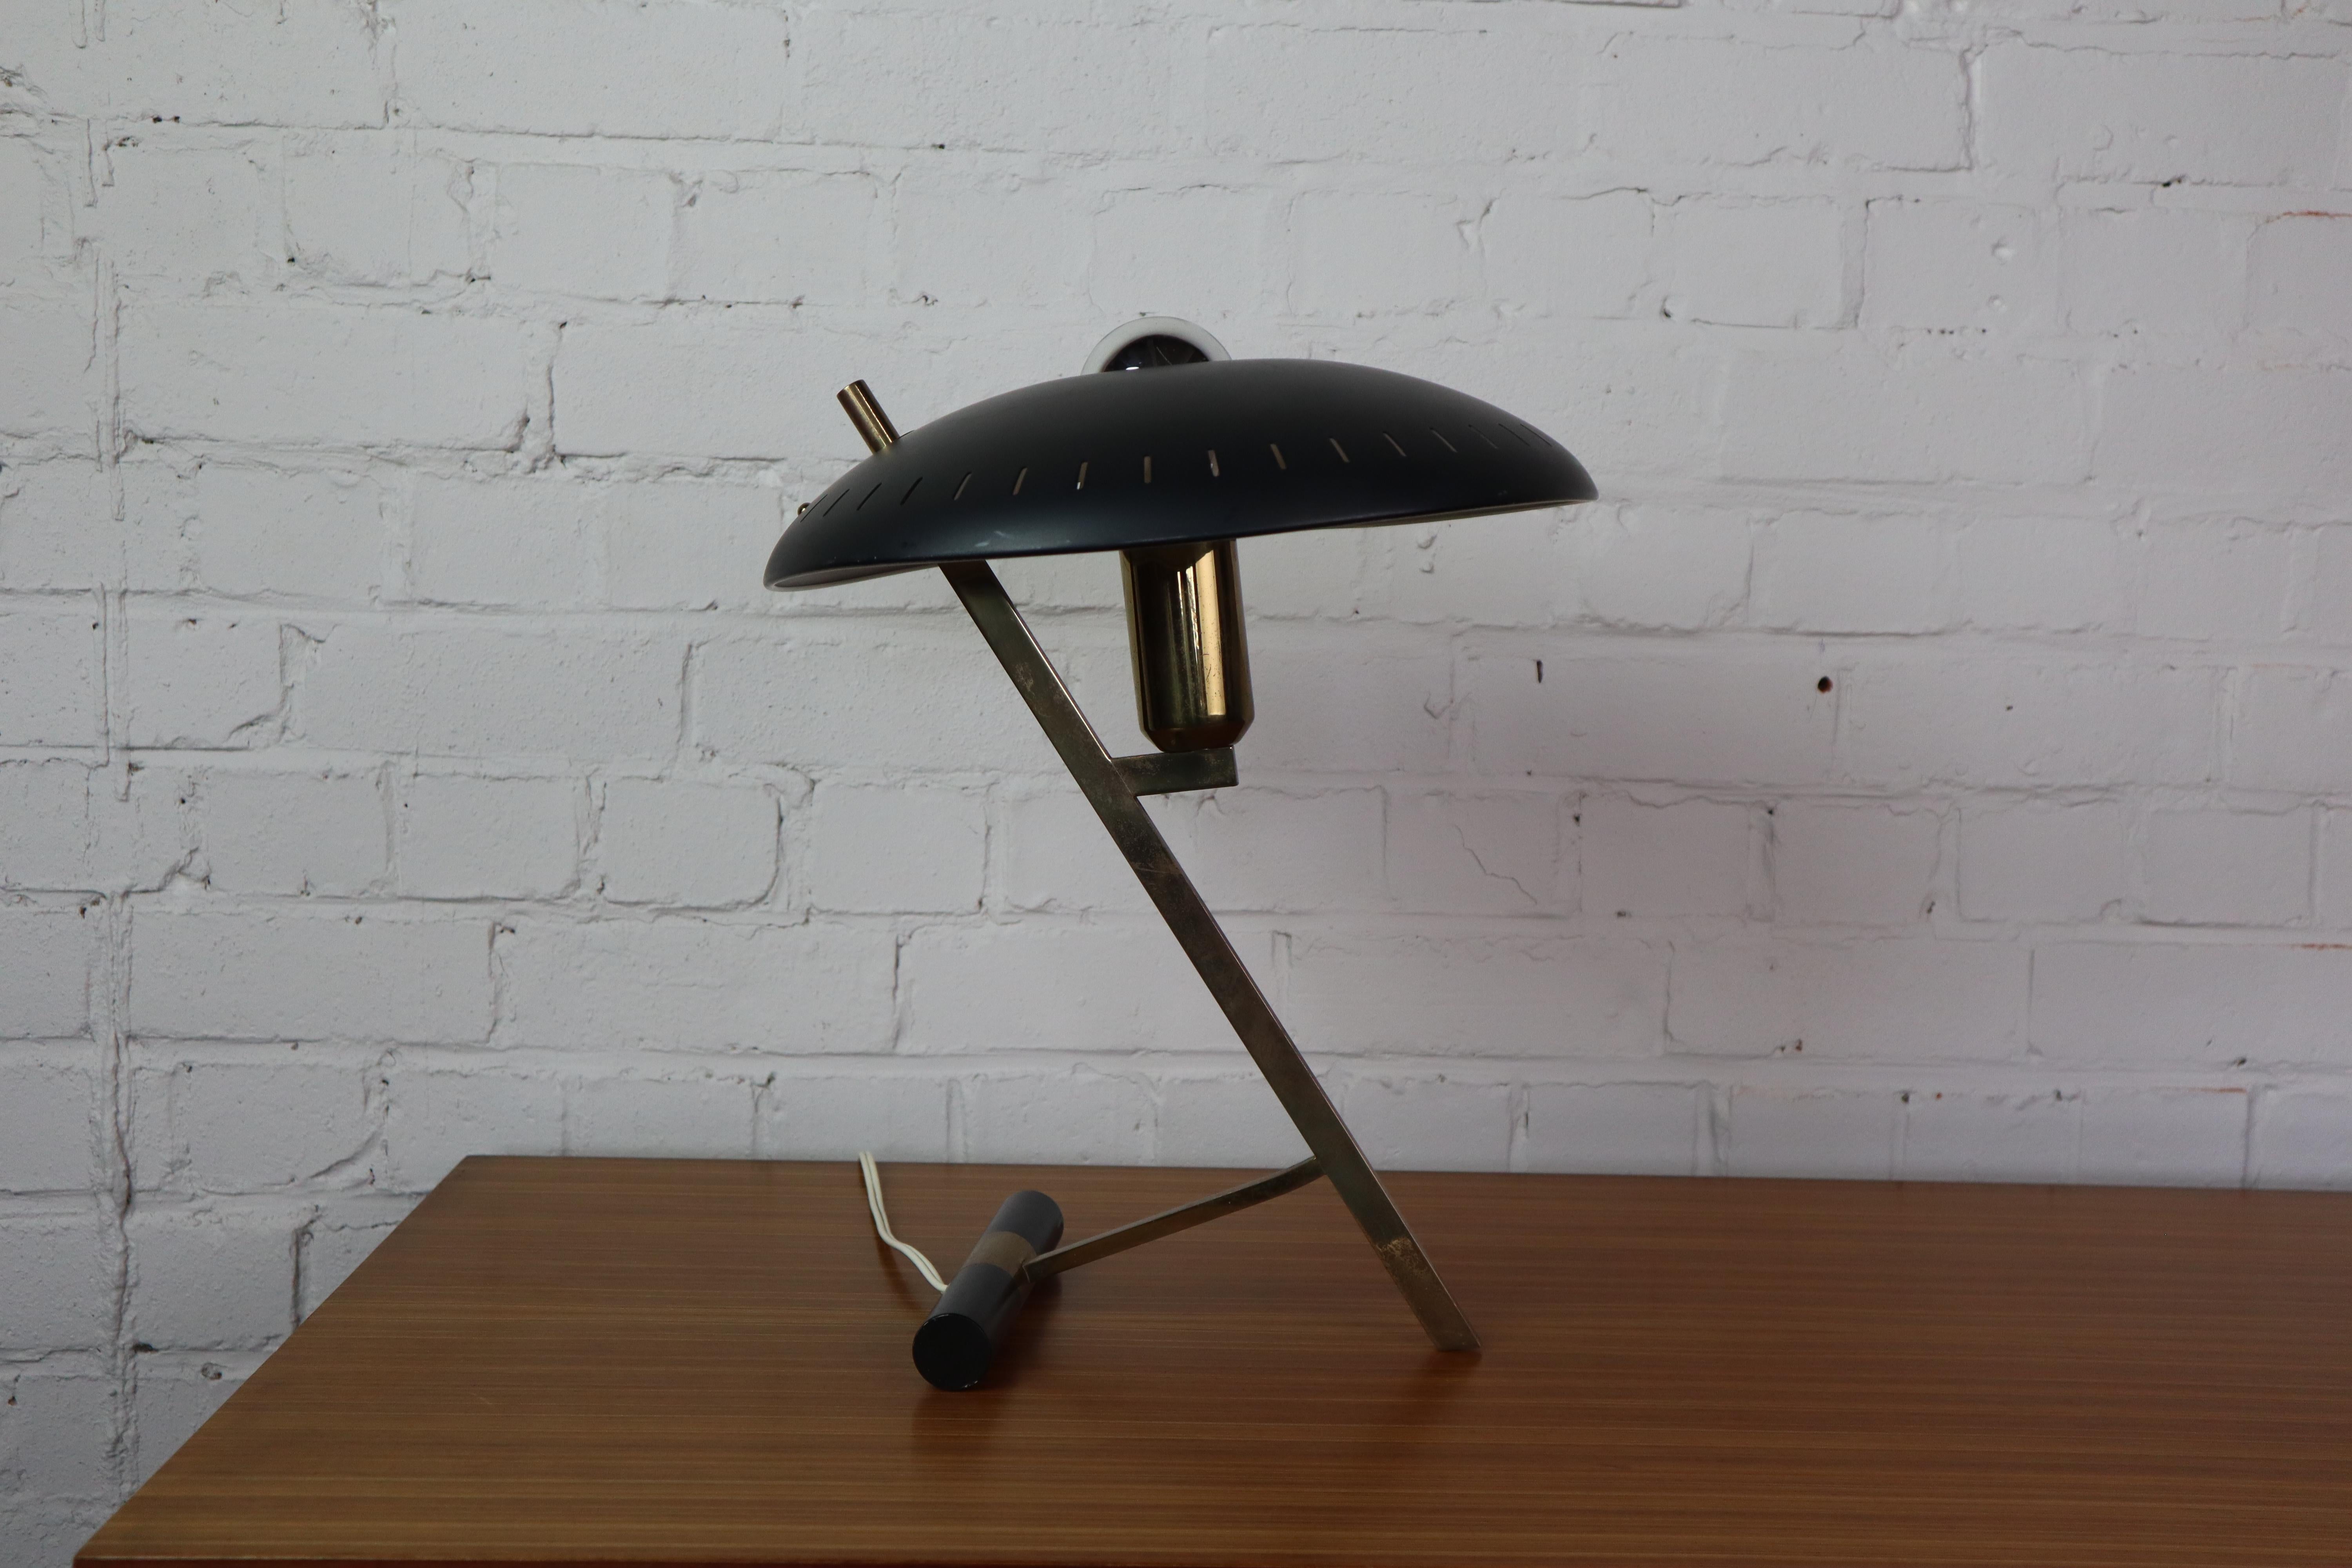 Iconic philips desk lamp named 